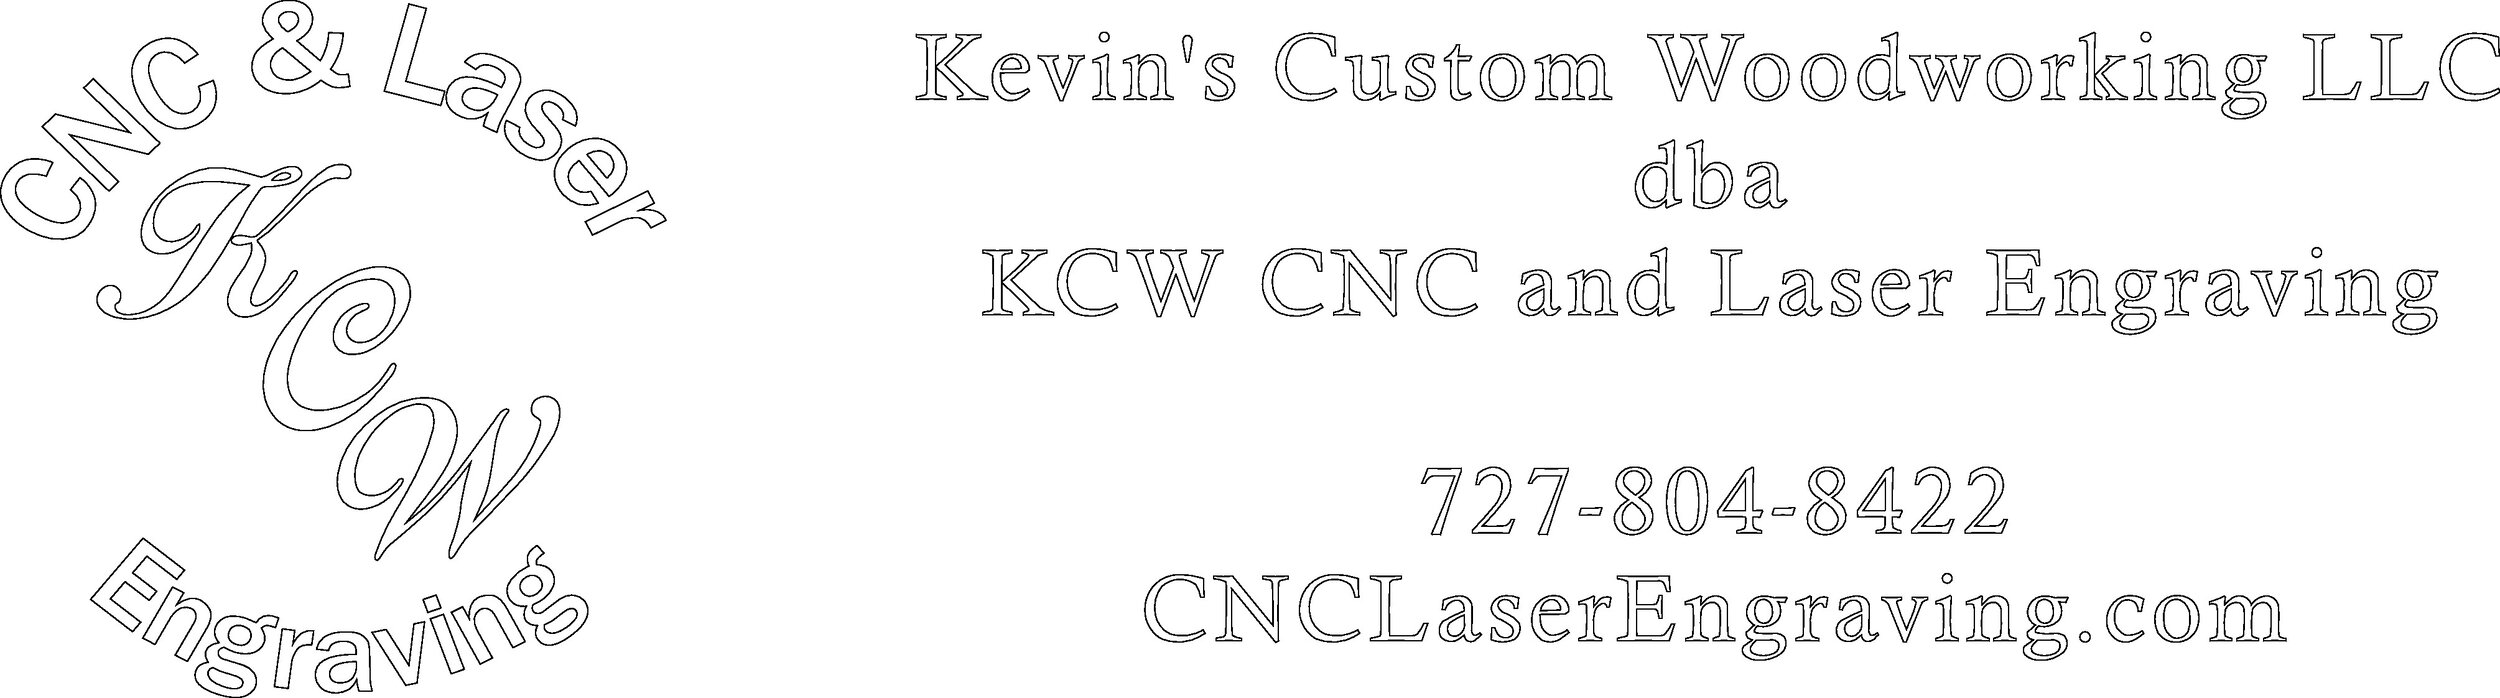 kcw logo.jpg